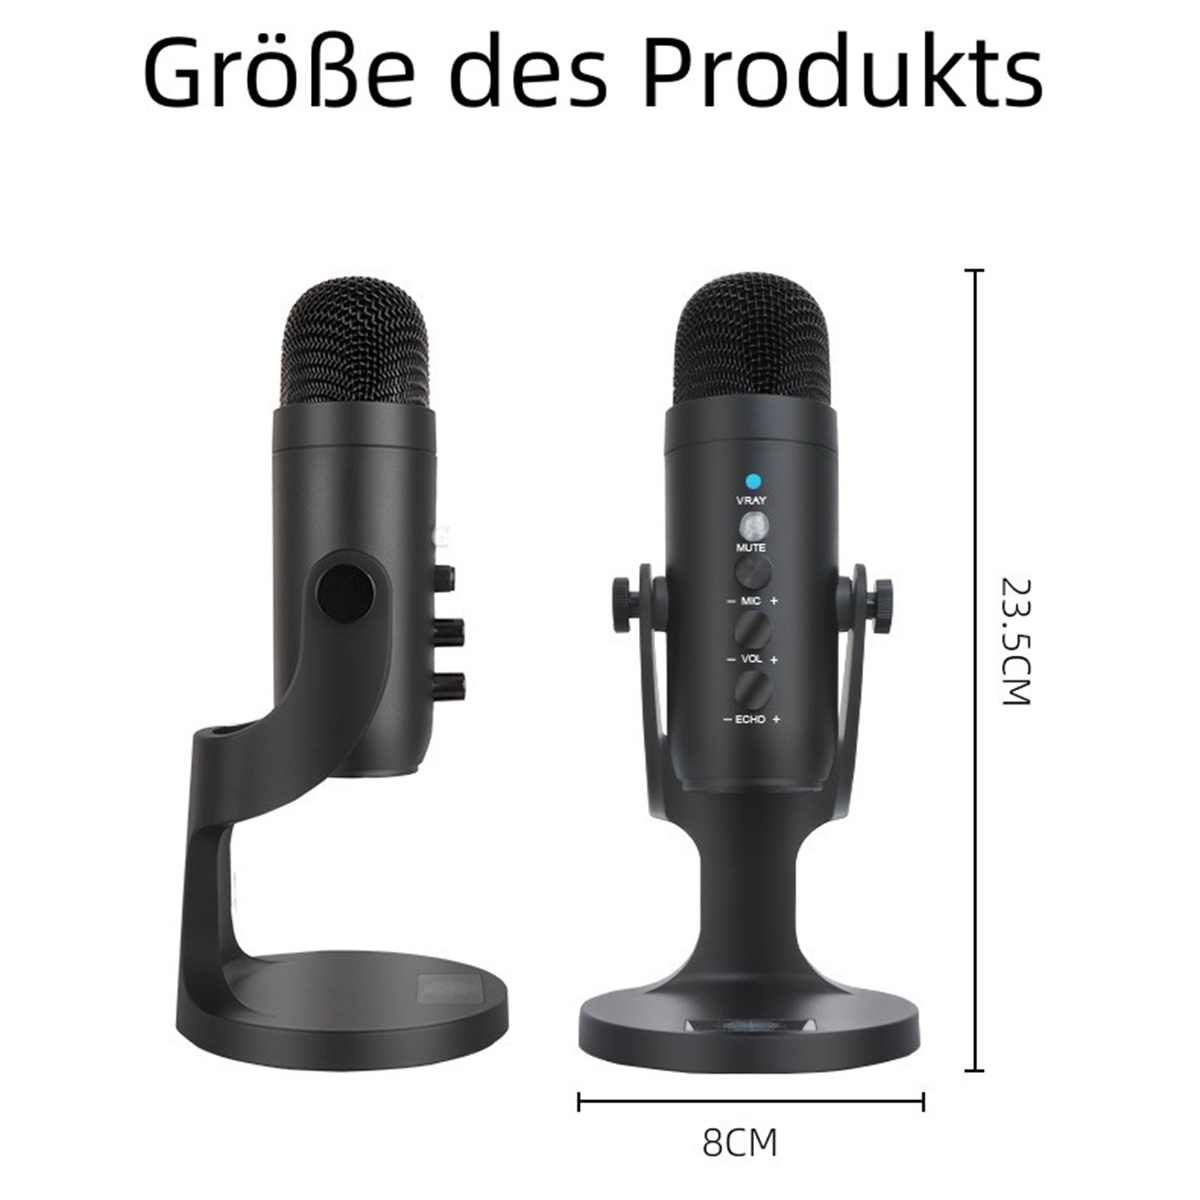 SYNTEK Mikrofon Rauschunterdrückung USB-Kondensatormikrofon Schwarz Aufnahme-Mikrofon schwarz Mikrofon